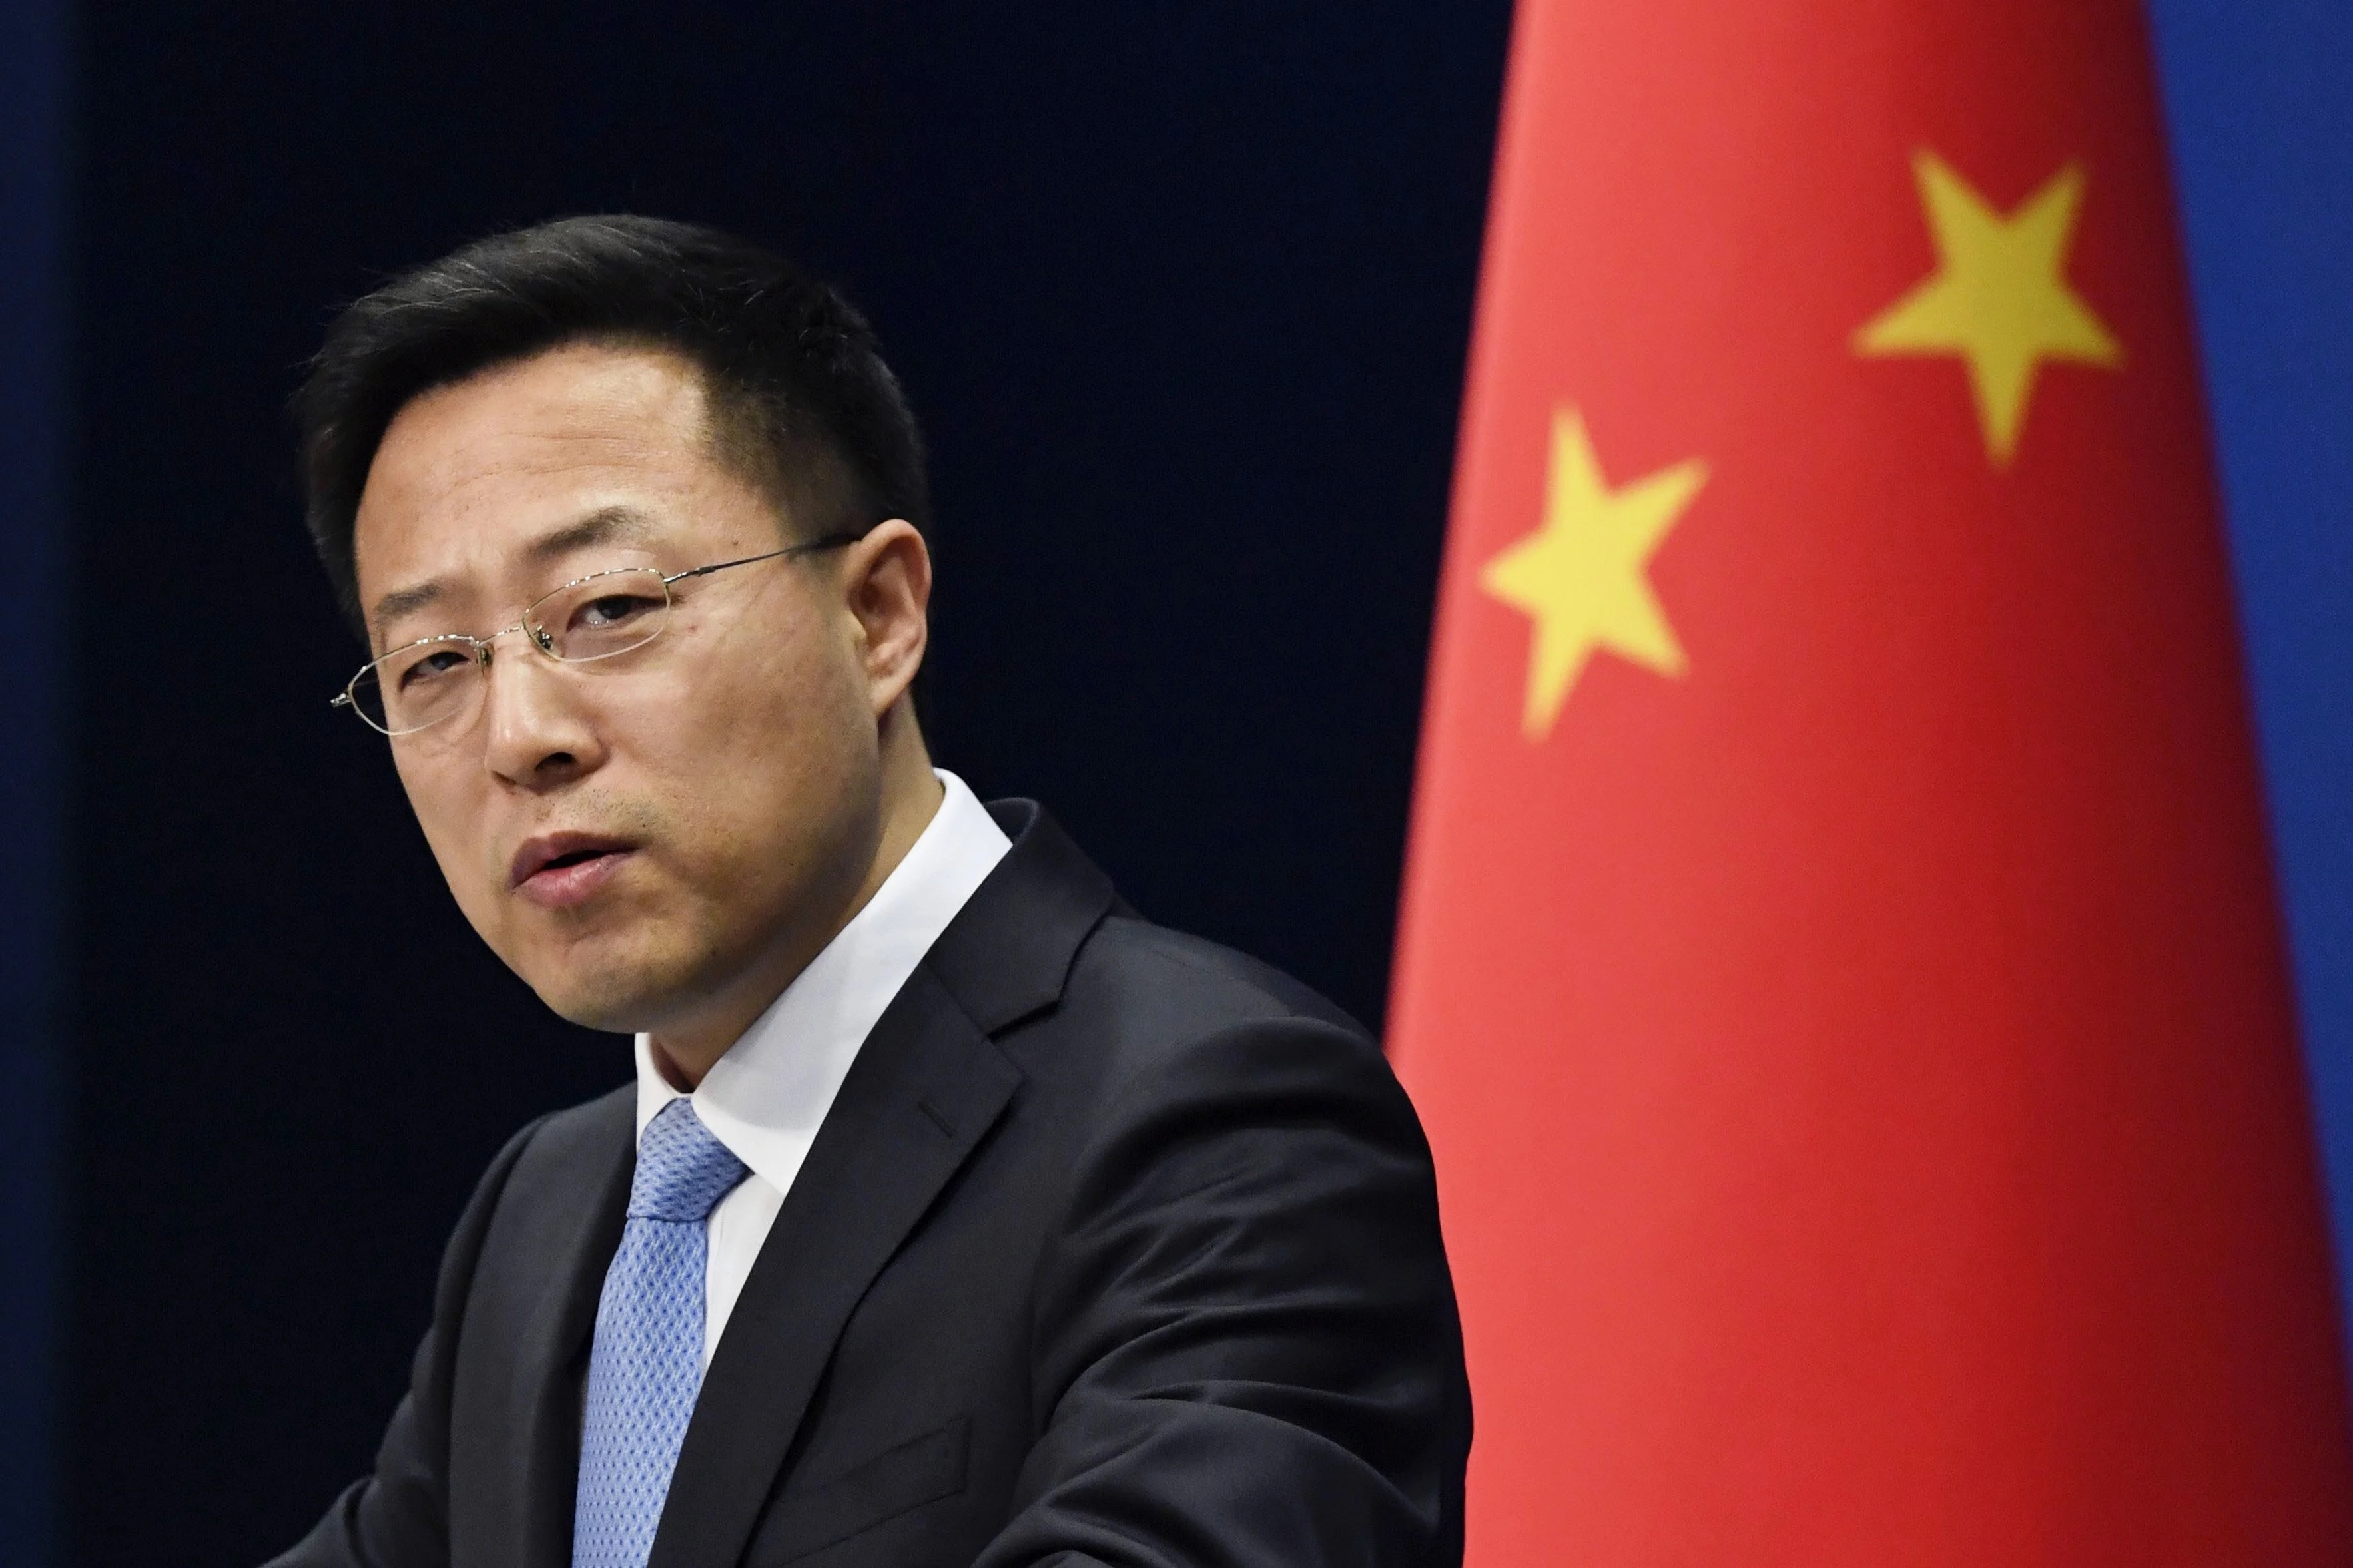 foreign ministry spokesman Zhao Lijian